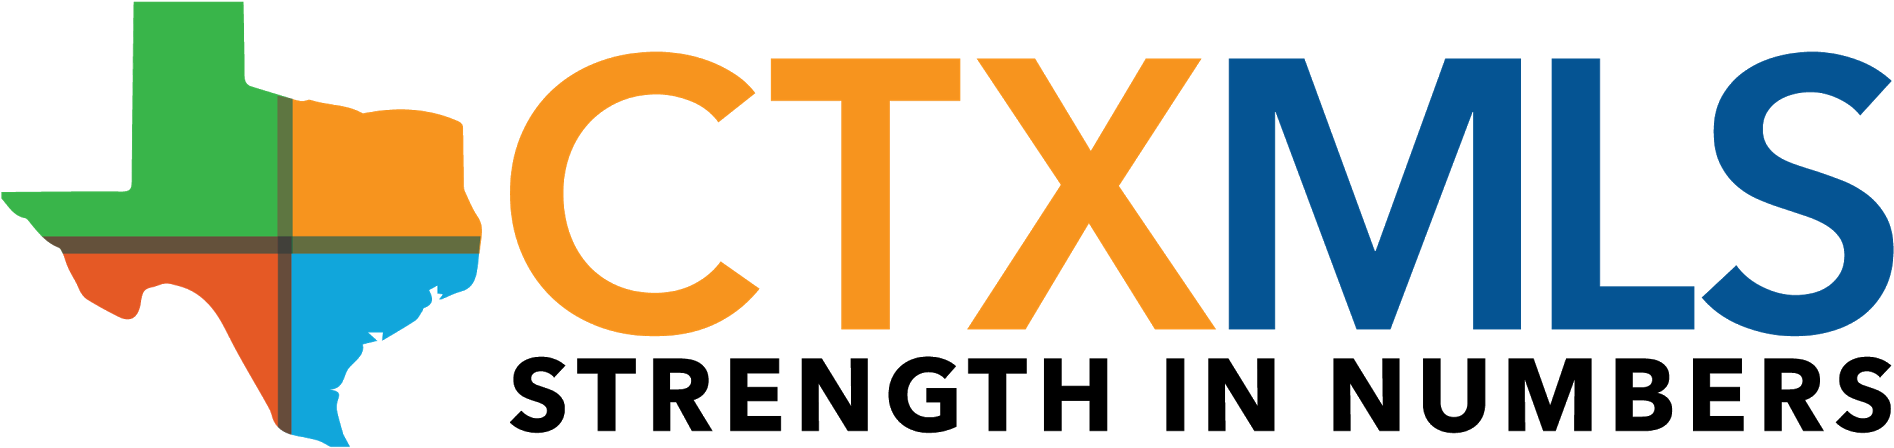 Ctxmls - Internet Data Exchange (1905x558)